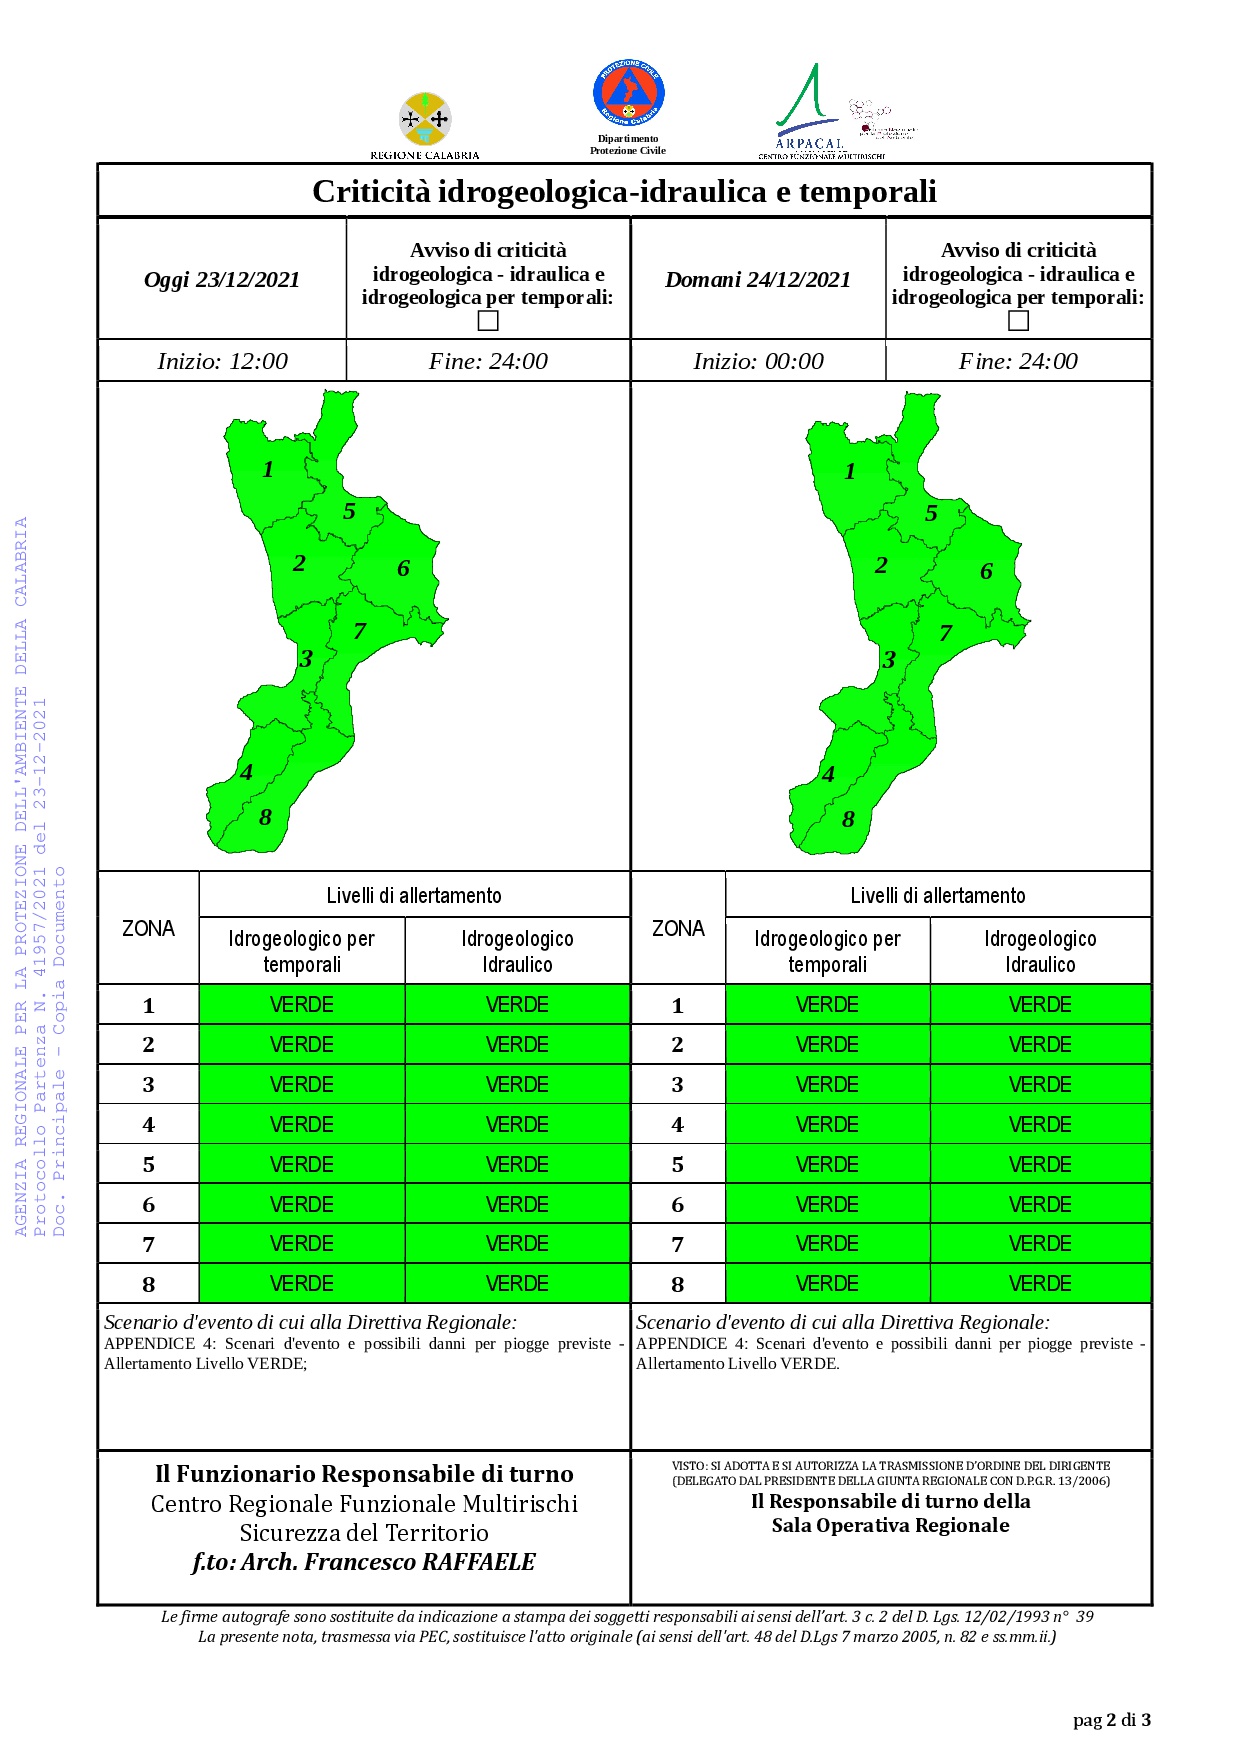 Criticità idrogeologica-idraulica e temporali in Calabria 23-12-2021